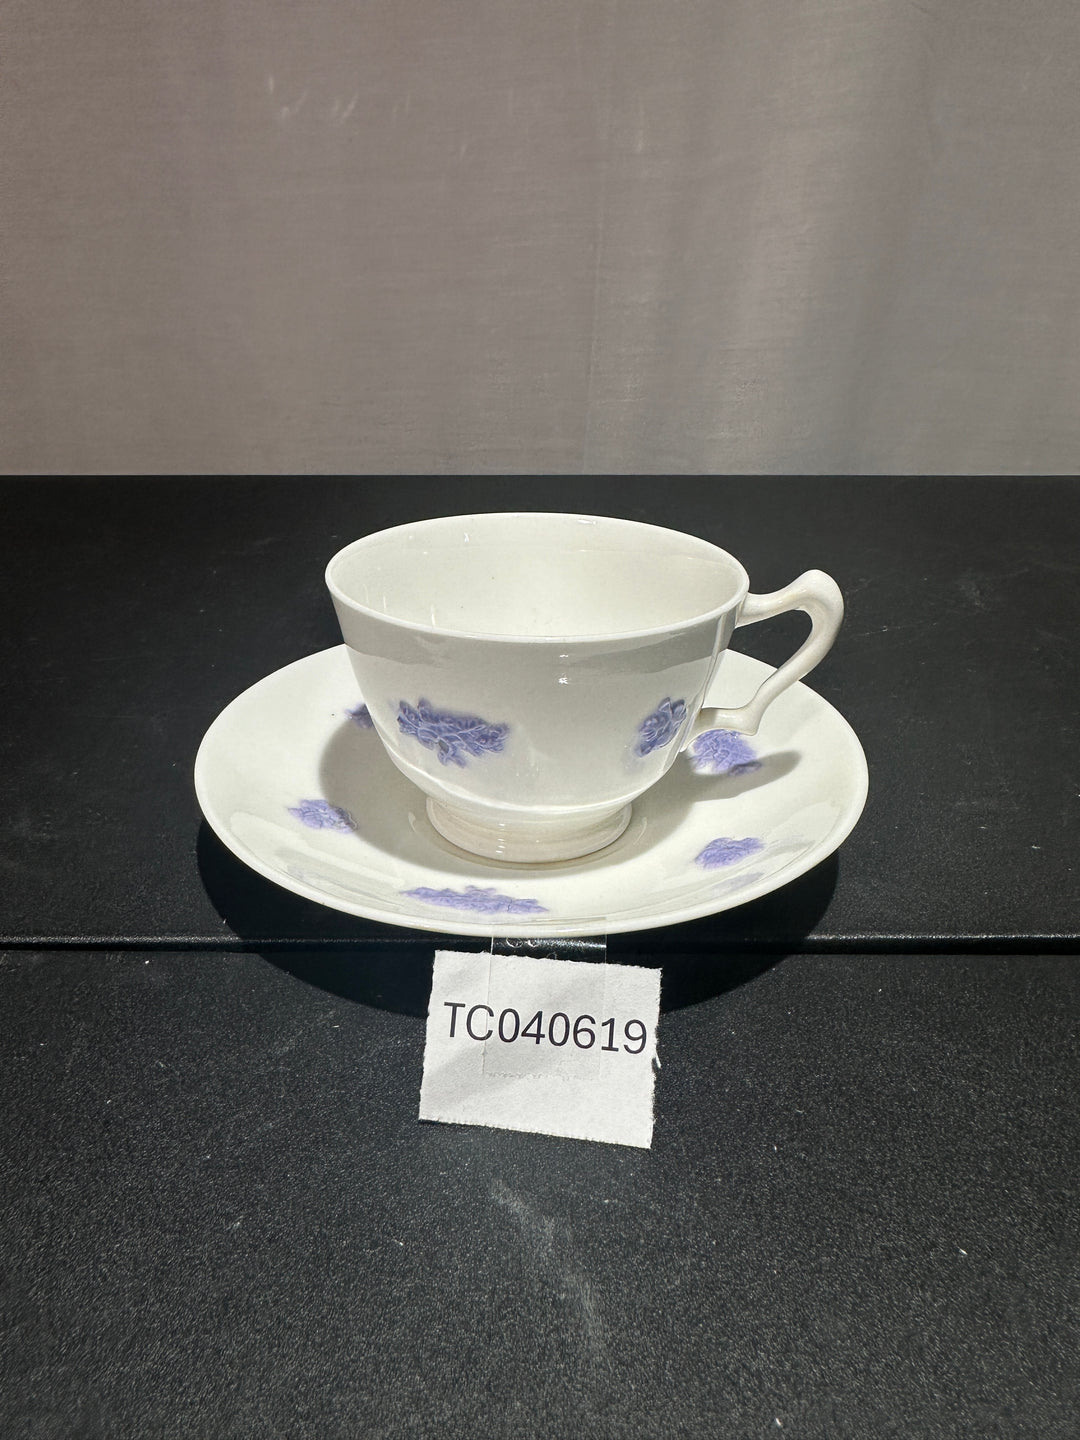 Tea Cup TC040619